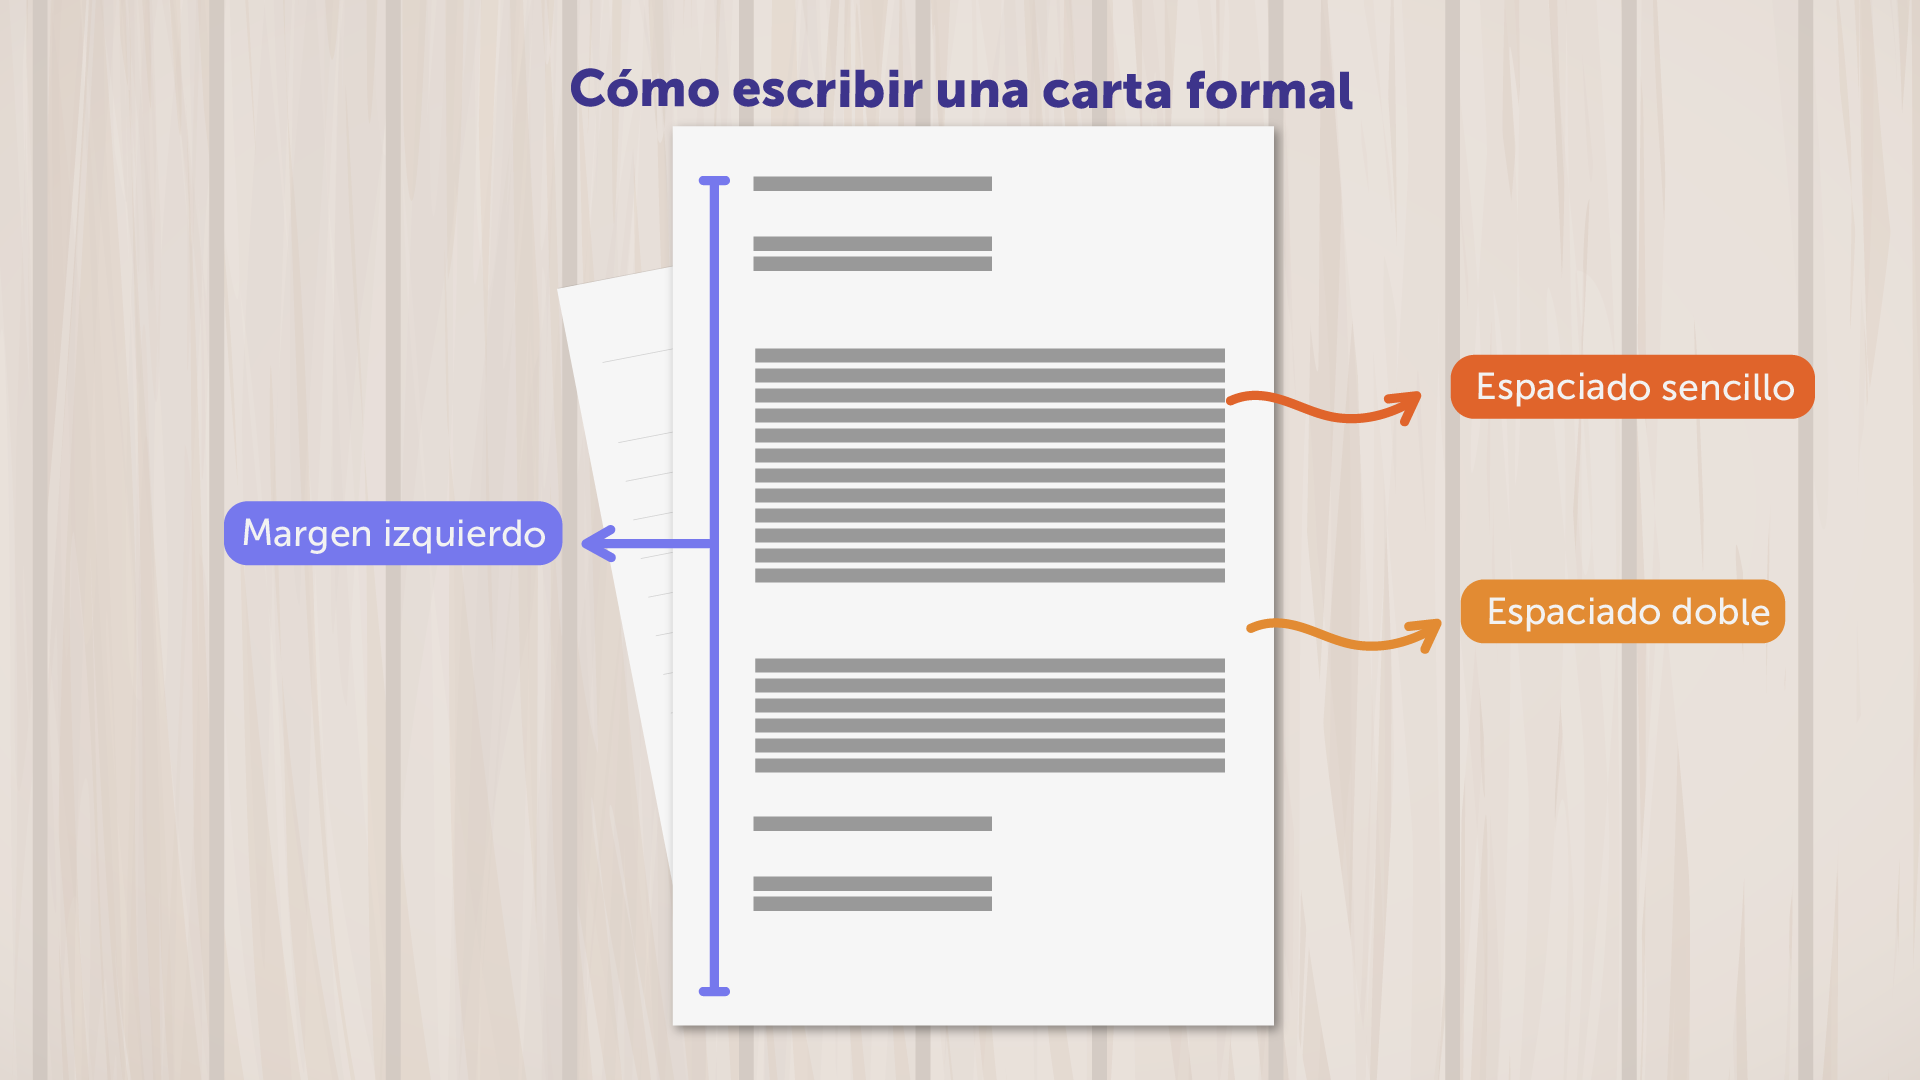 Formato bloque de documento formal: carta.